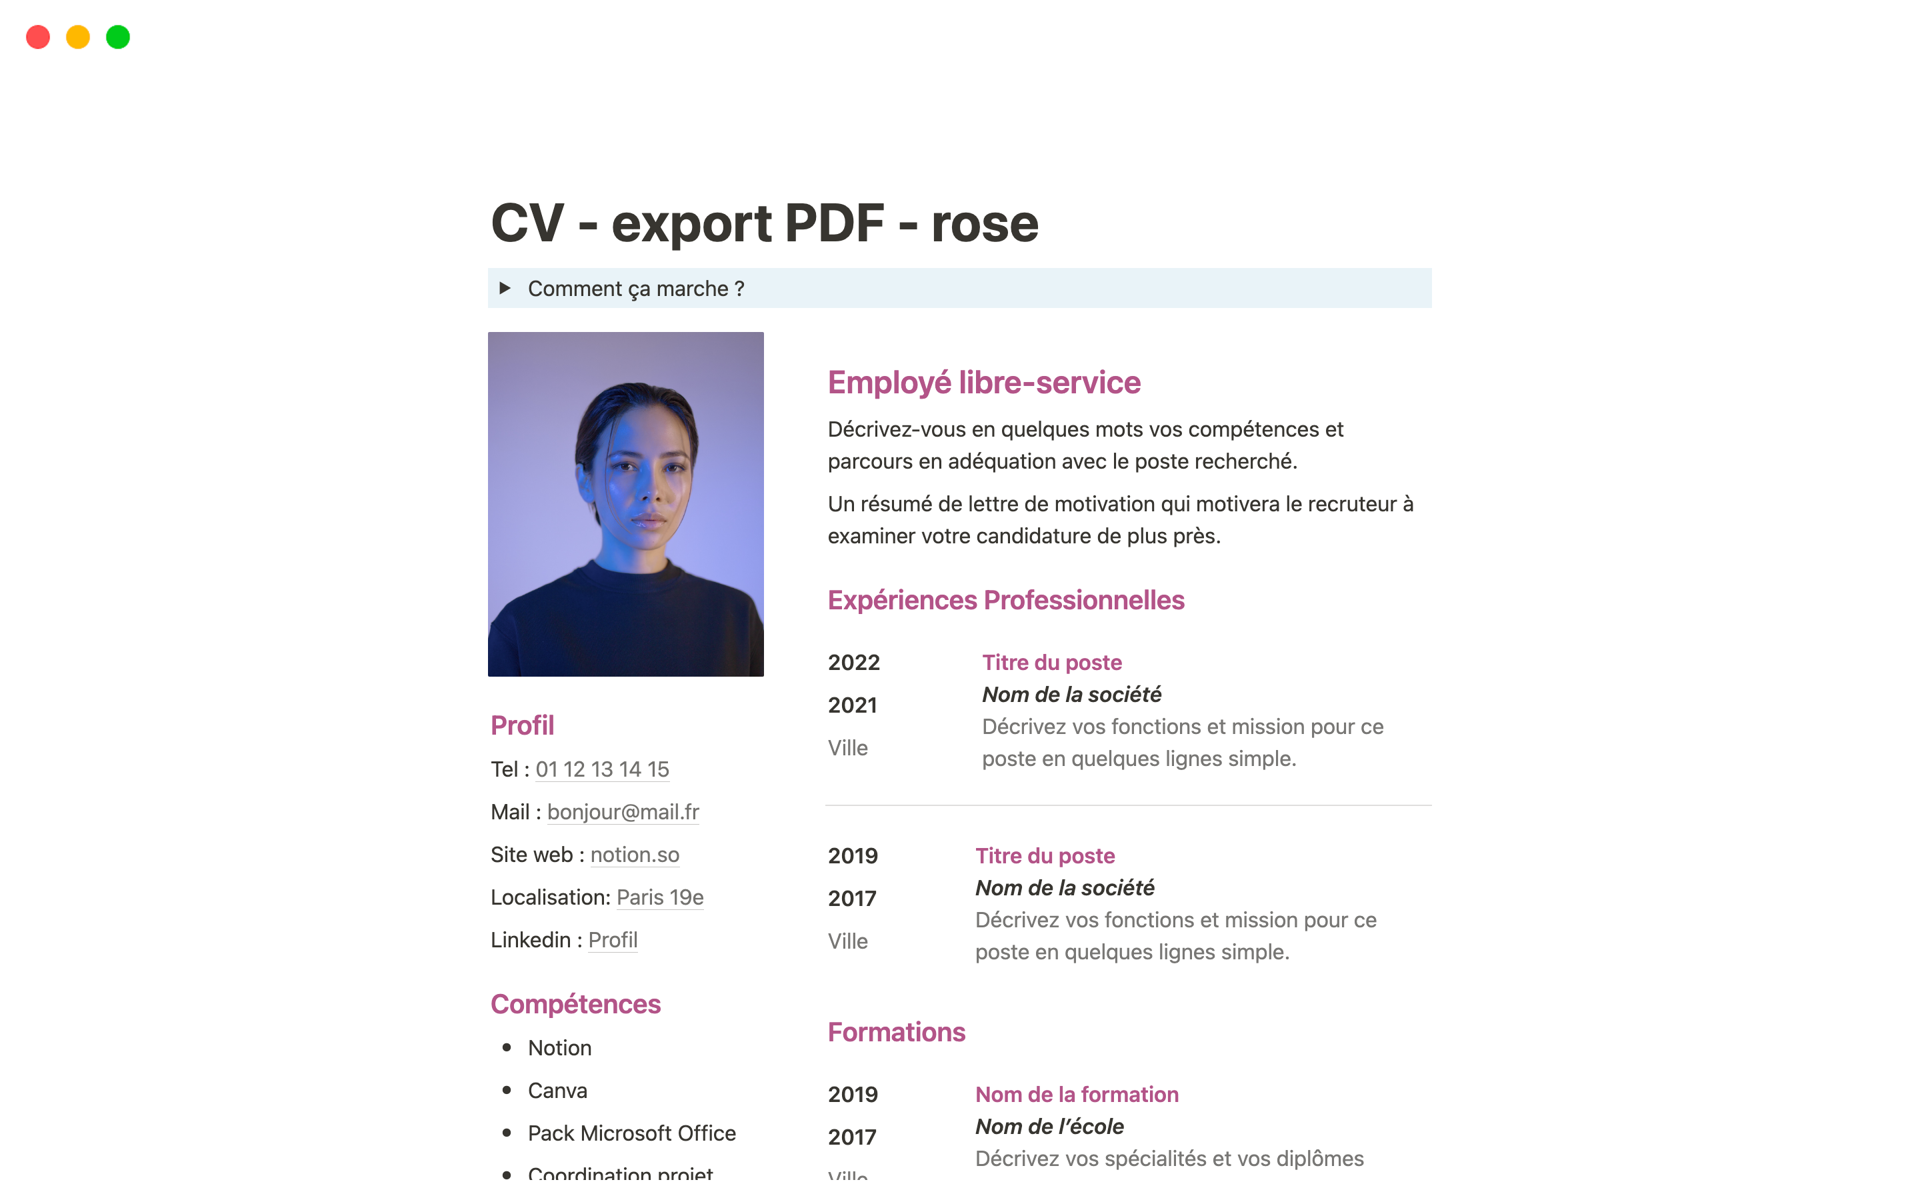 Vista previa de una plantilla para CV simple pour export PDF - rose